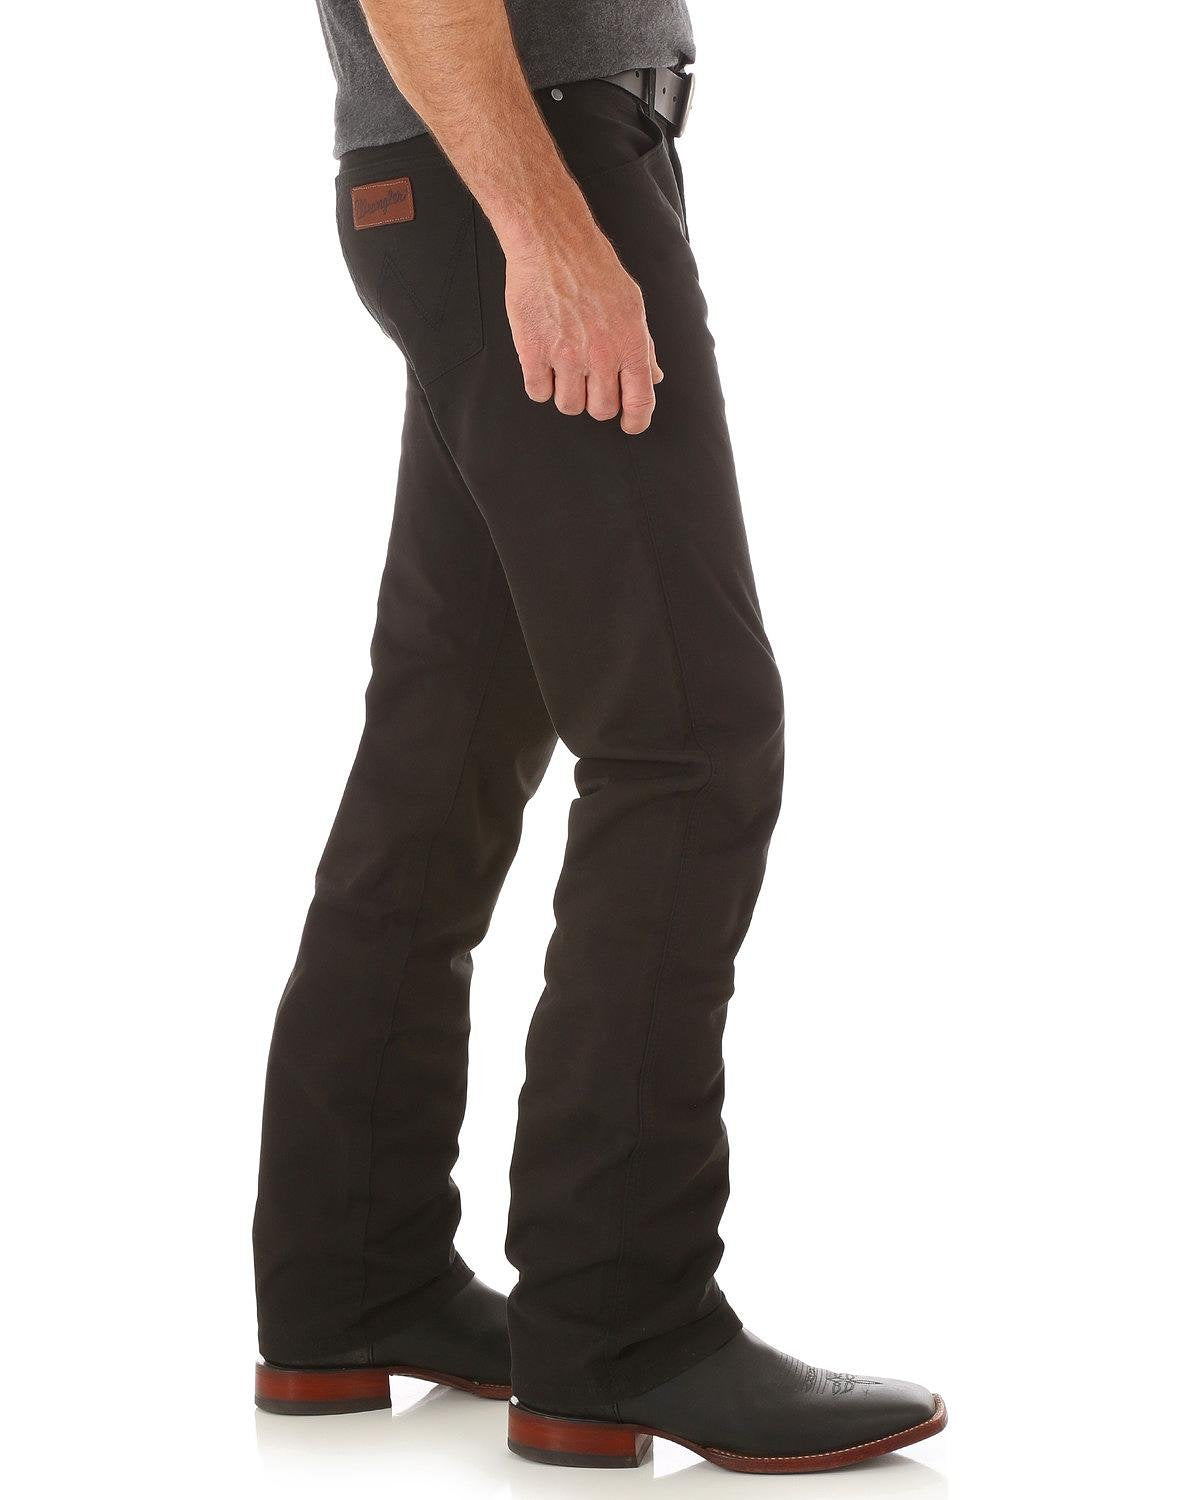 Wrangler Vaqueros retro de pierna recta para hombre, color negro, 36 W x 30 L